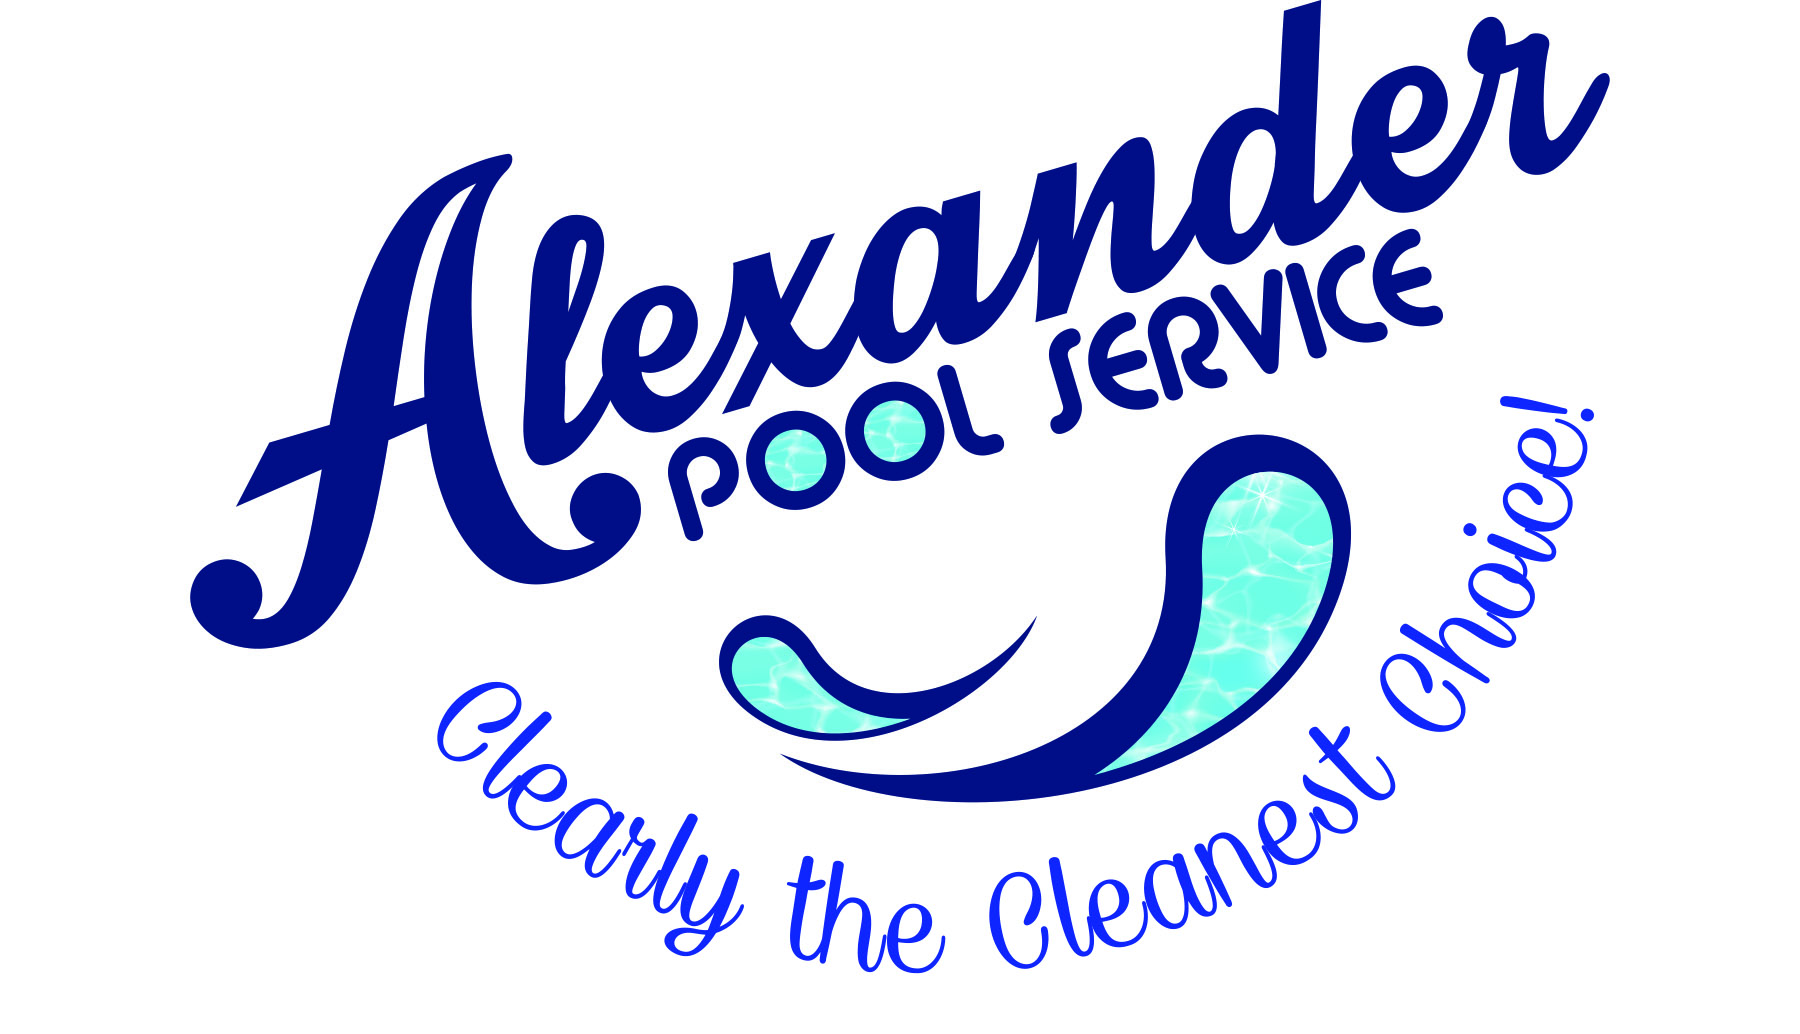 Alexander Pool Service, Inc. Logo